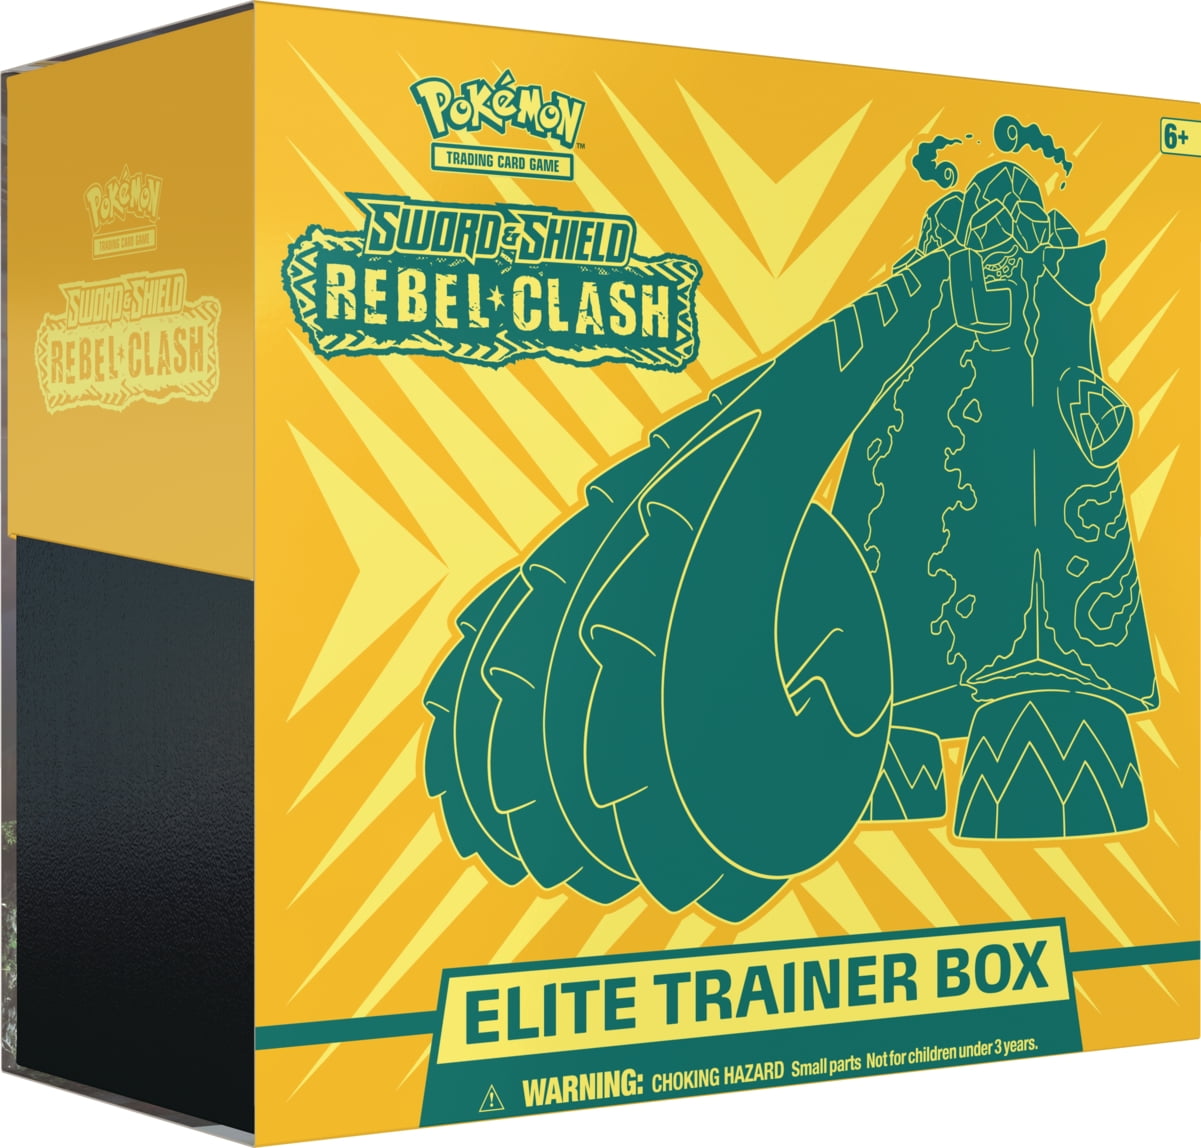 Pokemon Tcg Sword Shield 2 Rebel Clash Elite Trainer Box 8 Booster Packs 45 Energy Cards 6 Dice Walmart Com Walmart Com